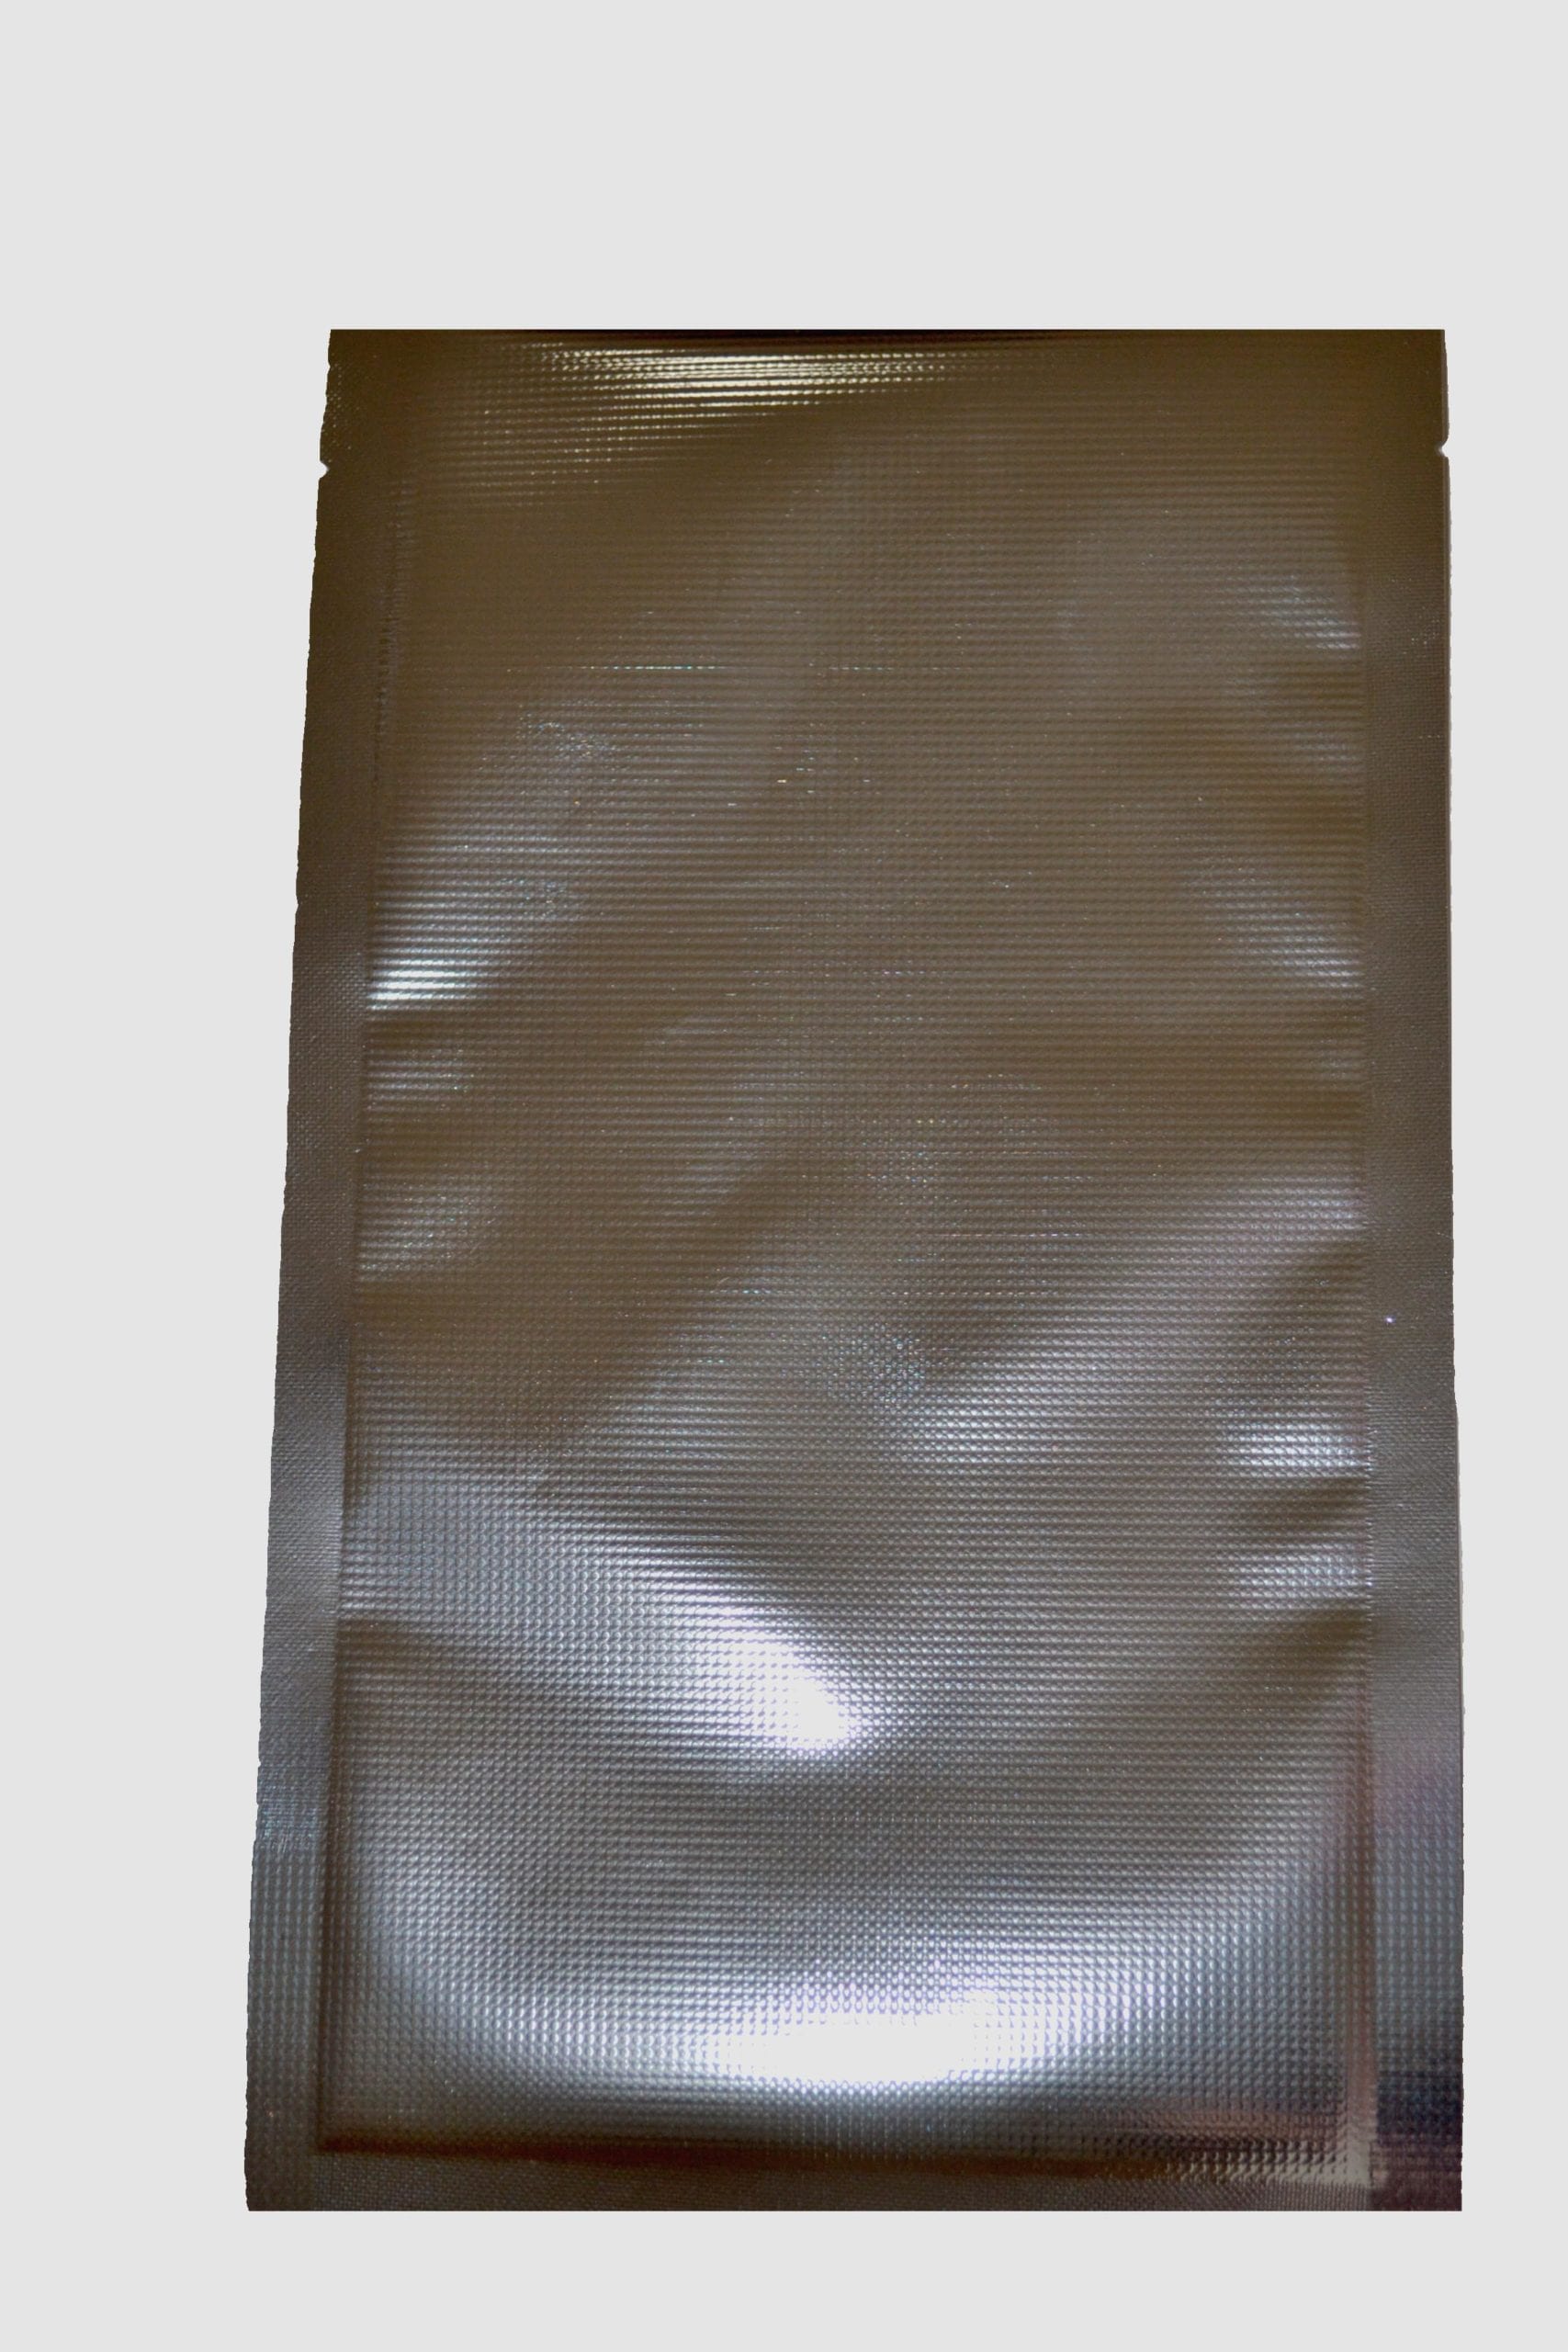 50 ULTRA Quart Sized Vacuum Sealer Bags (9 x 12)